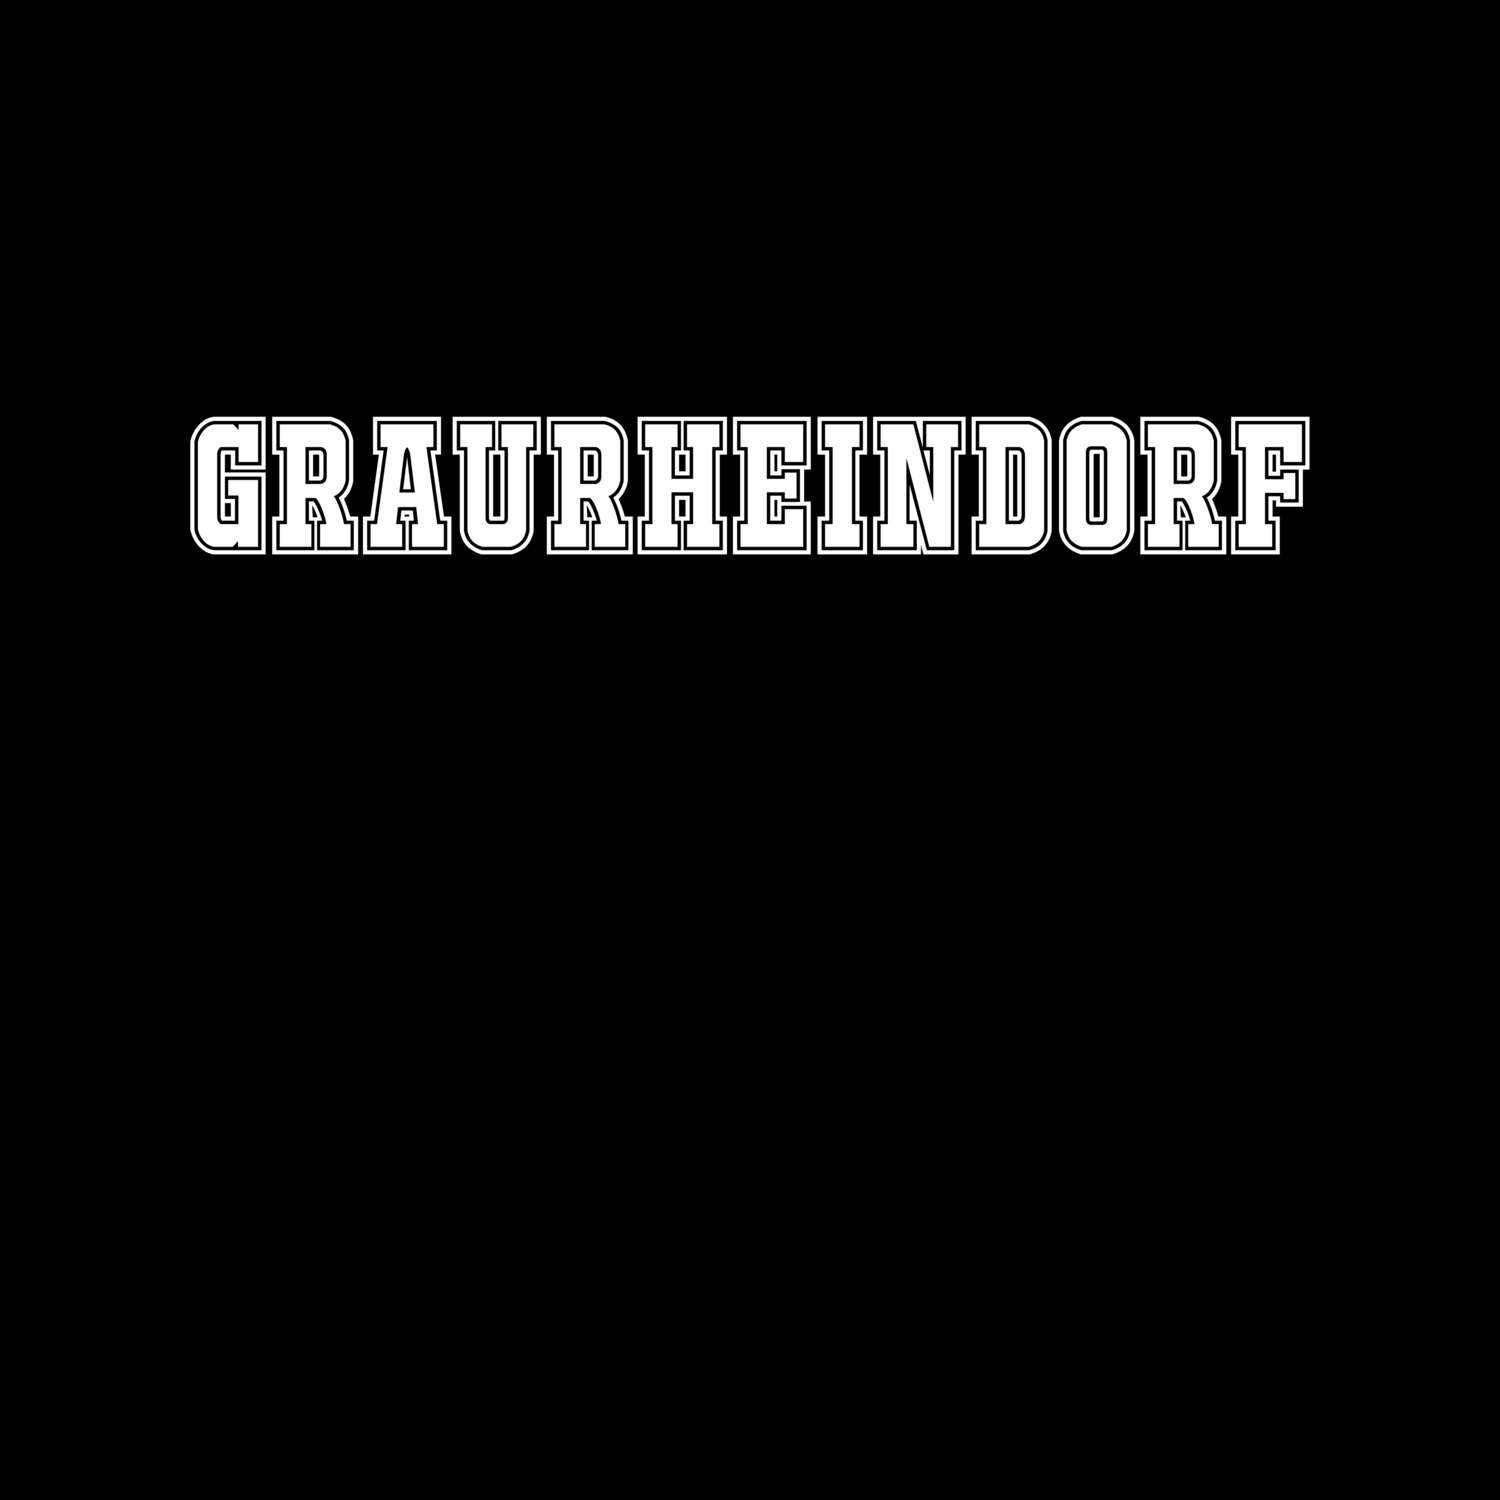 Graurheindorf T-Shirt »Classic«